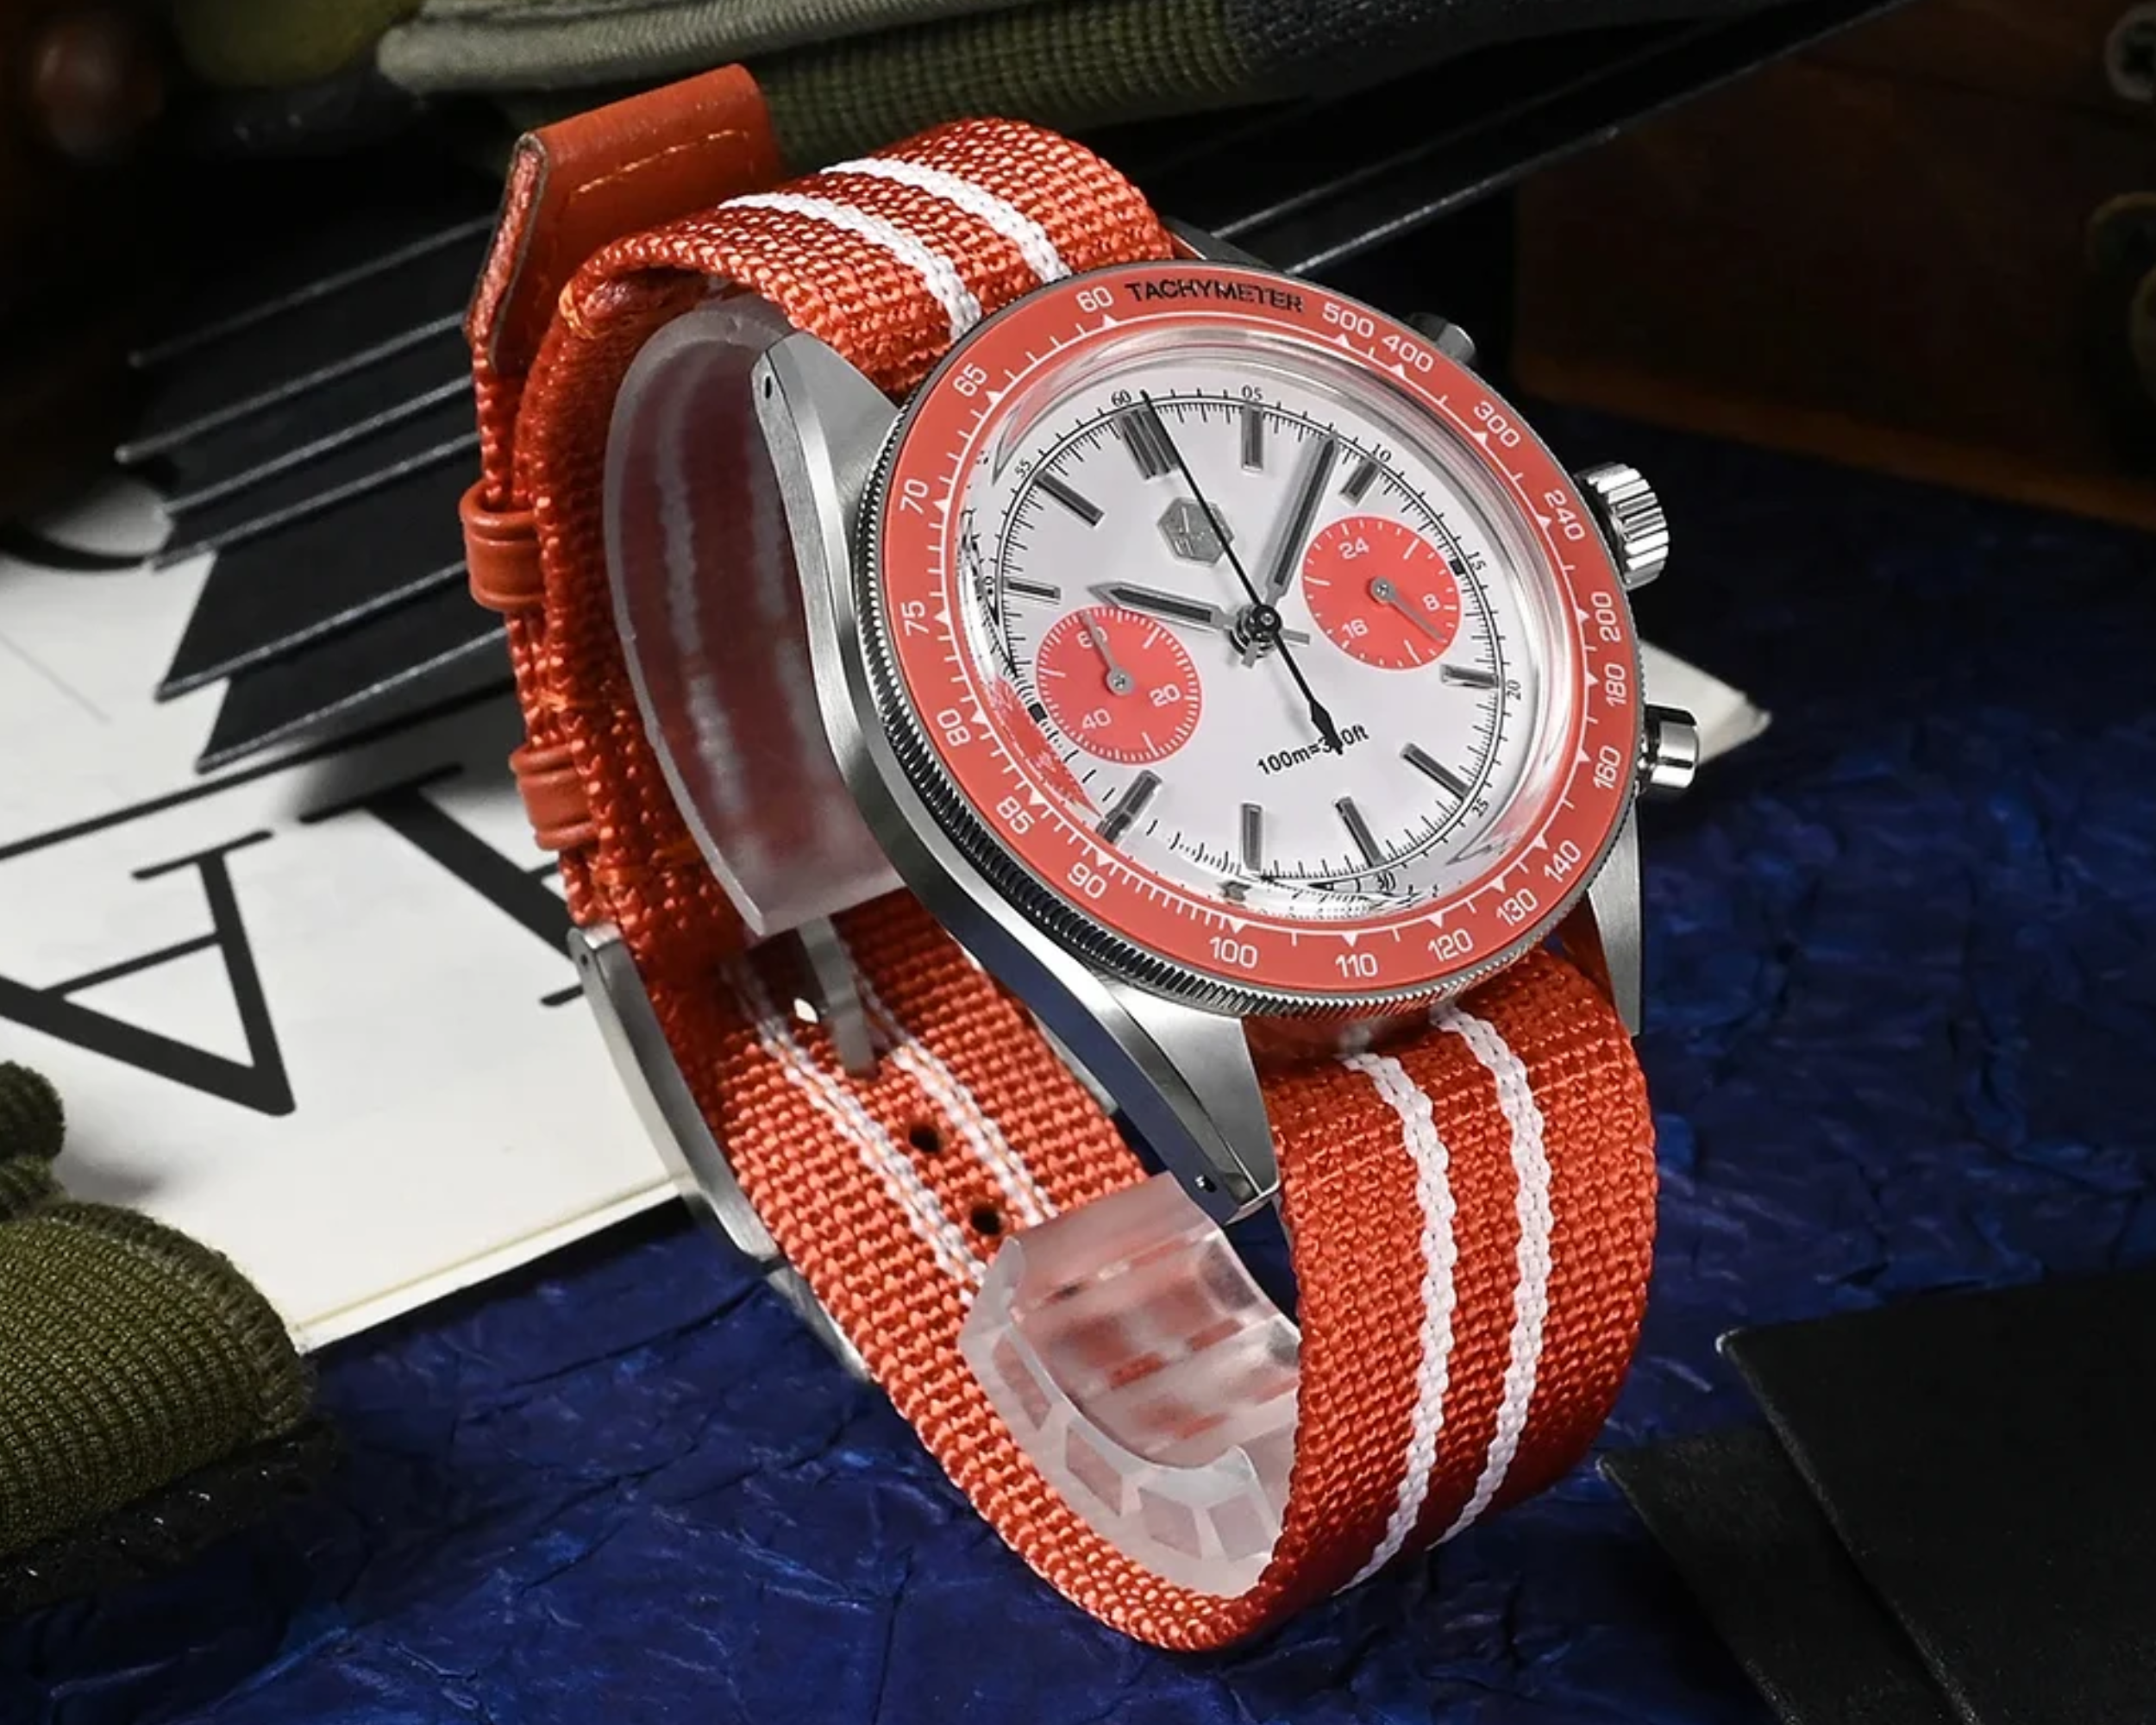 San Martin Chronograph VK64 Quartz Watch Original Design SN0116 - Orange